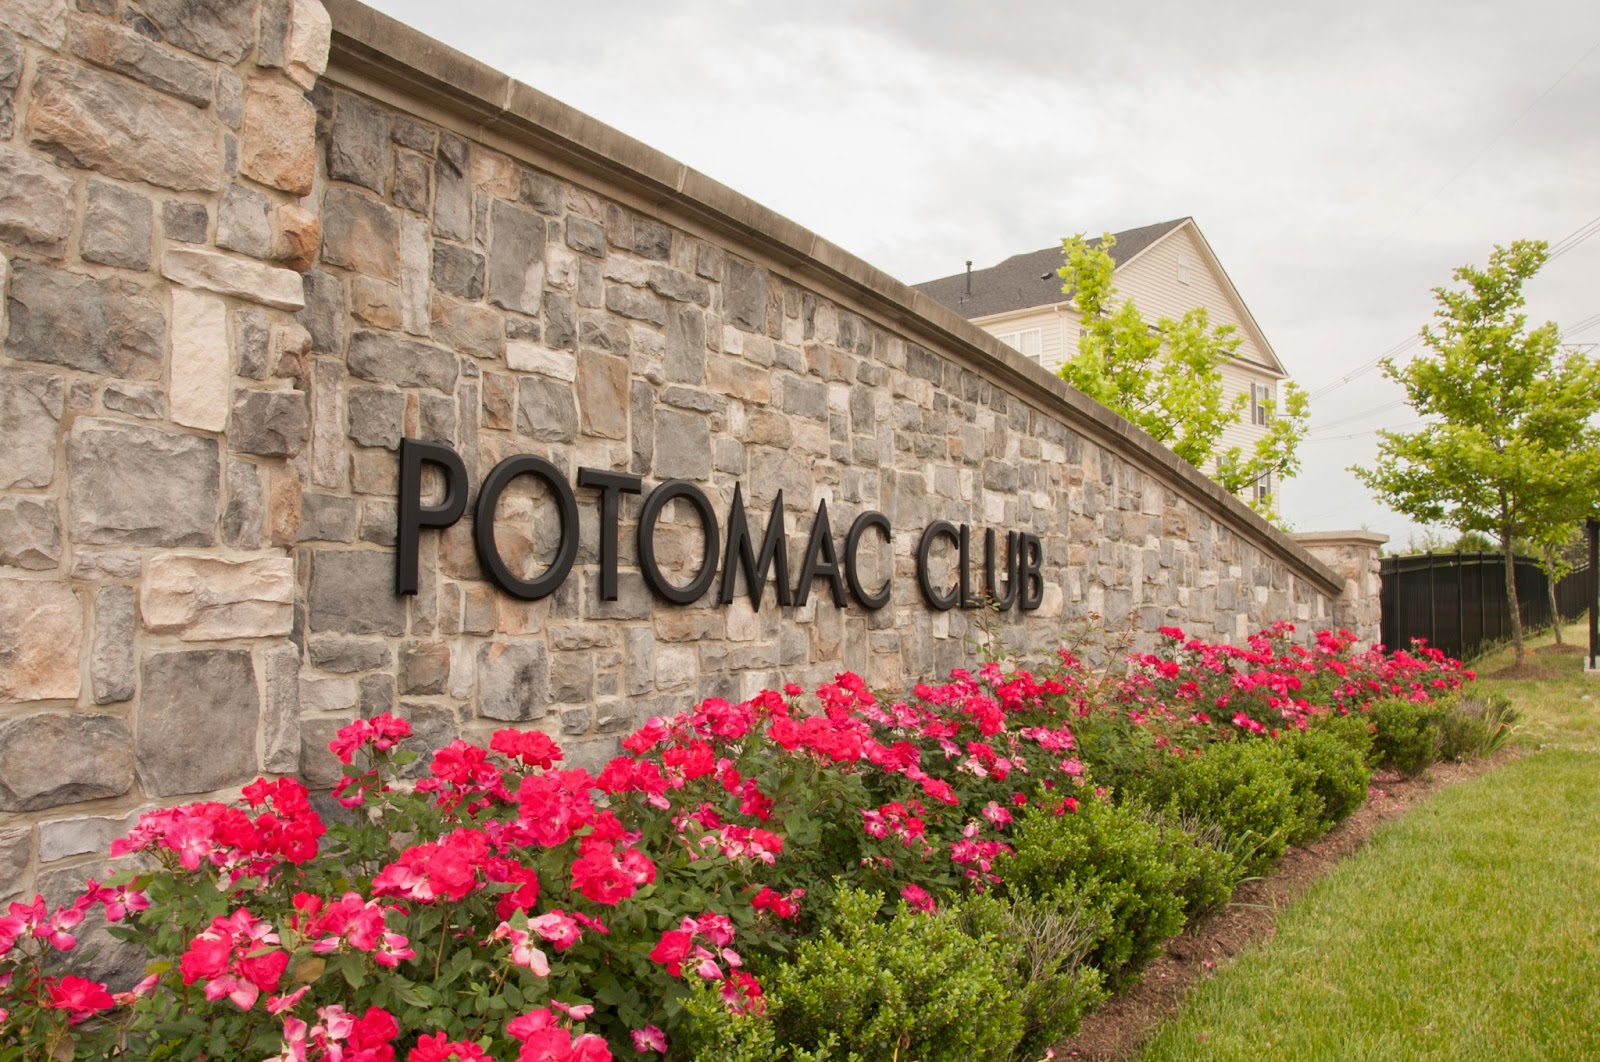 Potomac Club Community Woodbridge VA